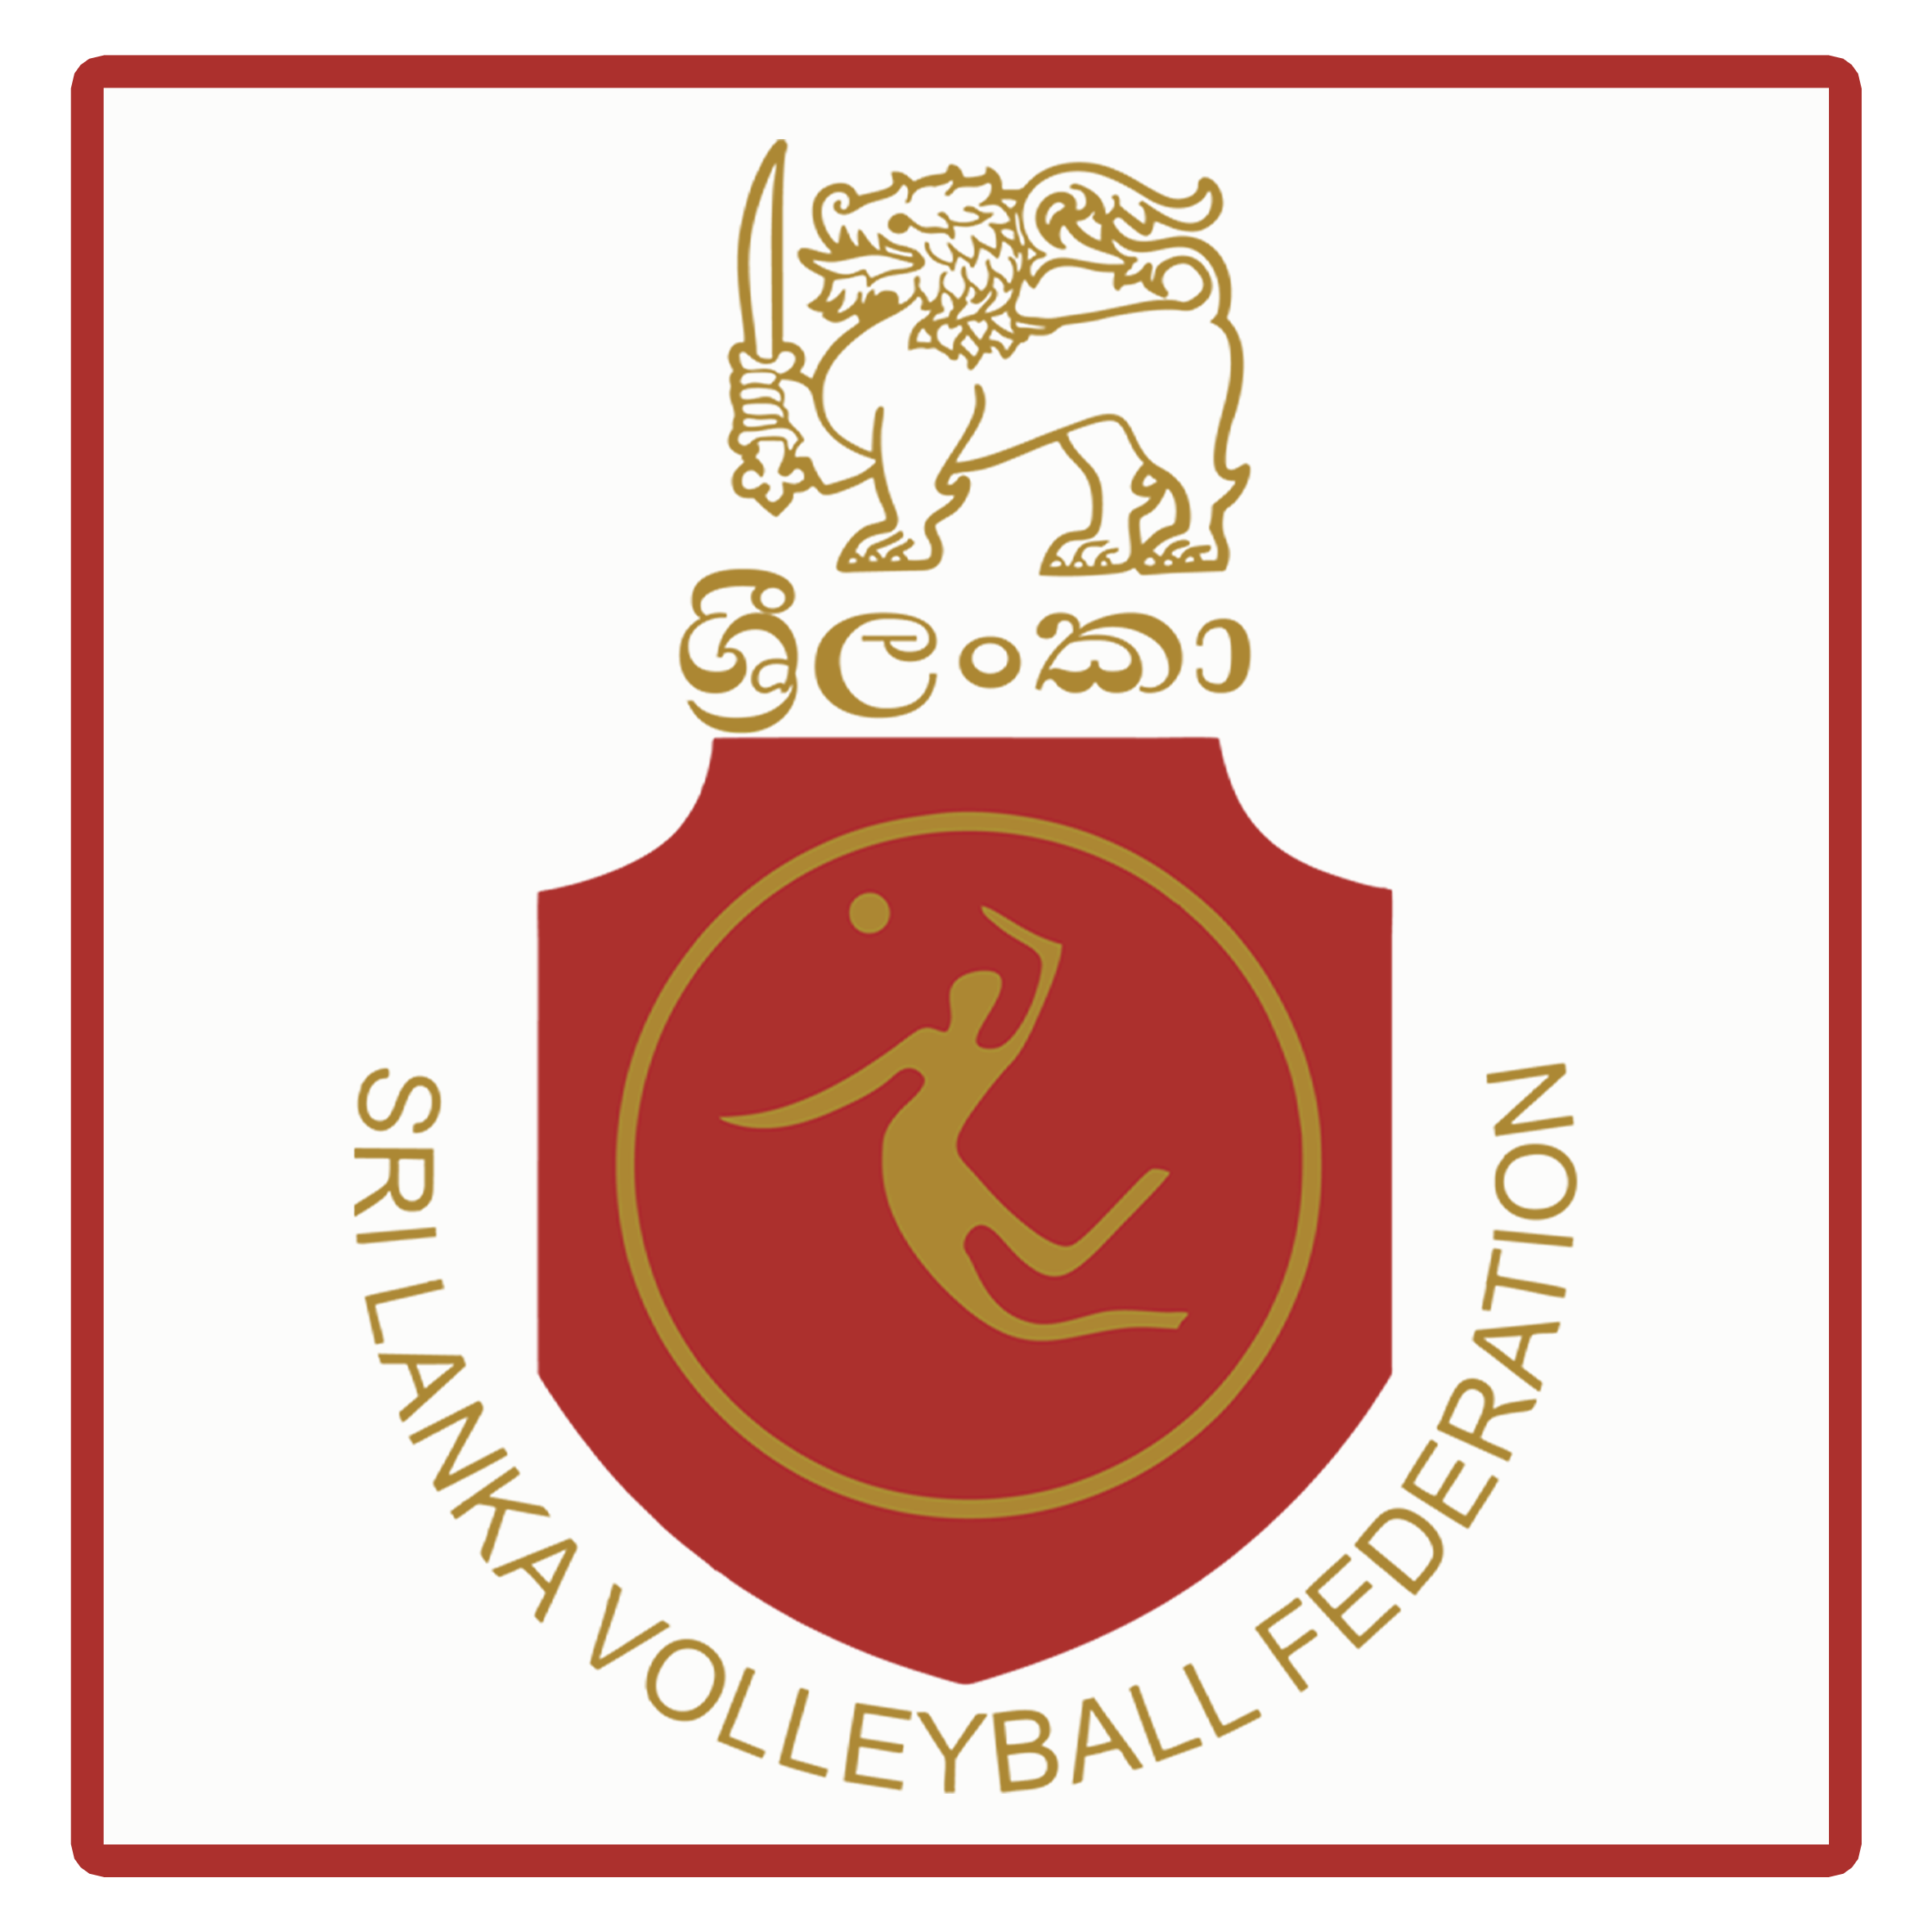 Sri Lanka Volleyball